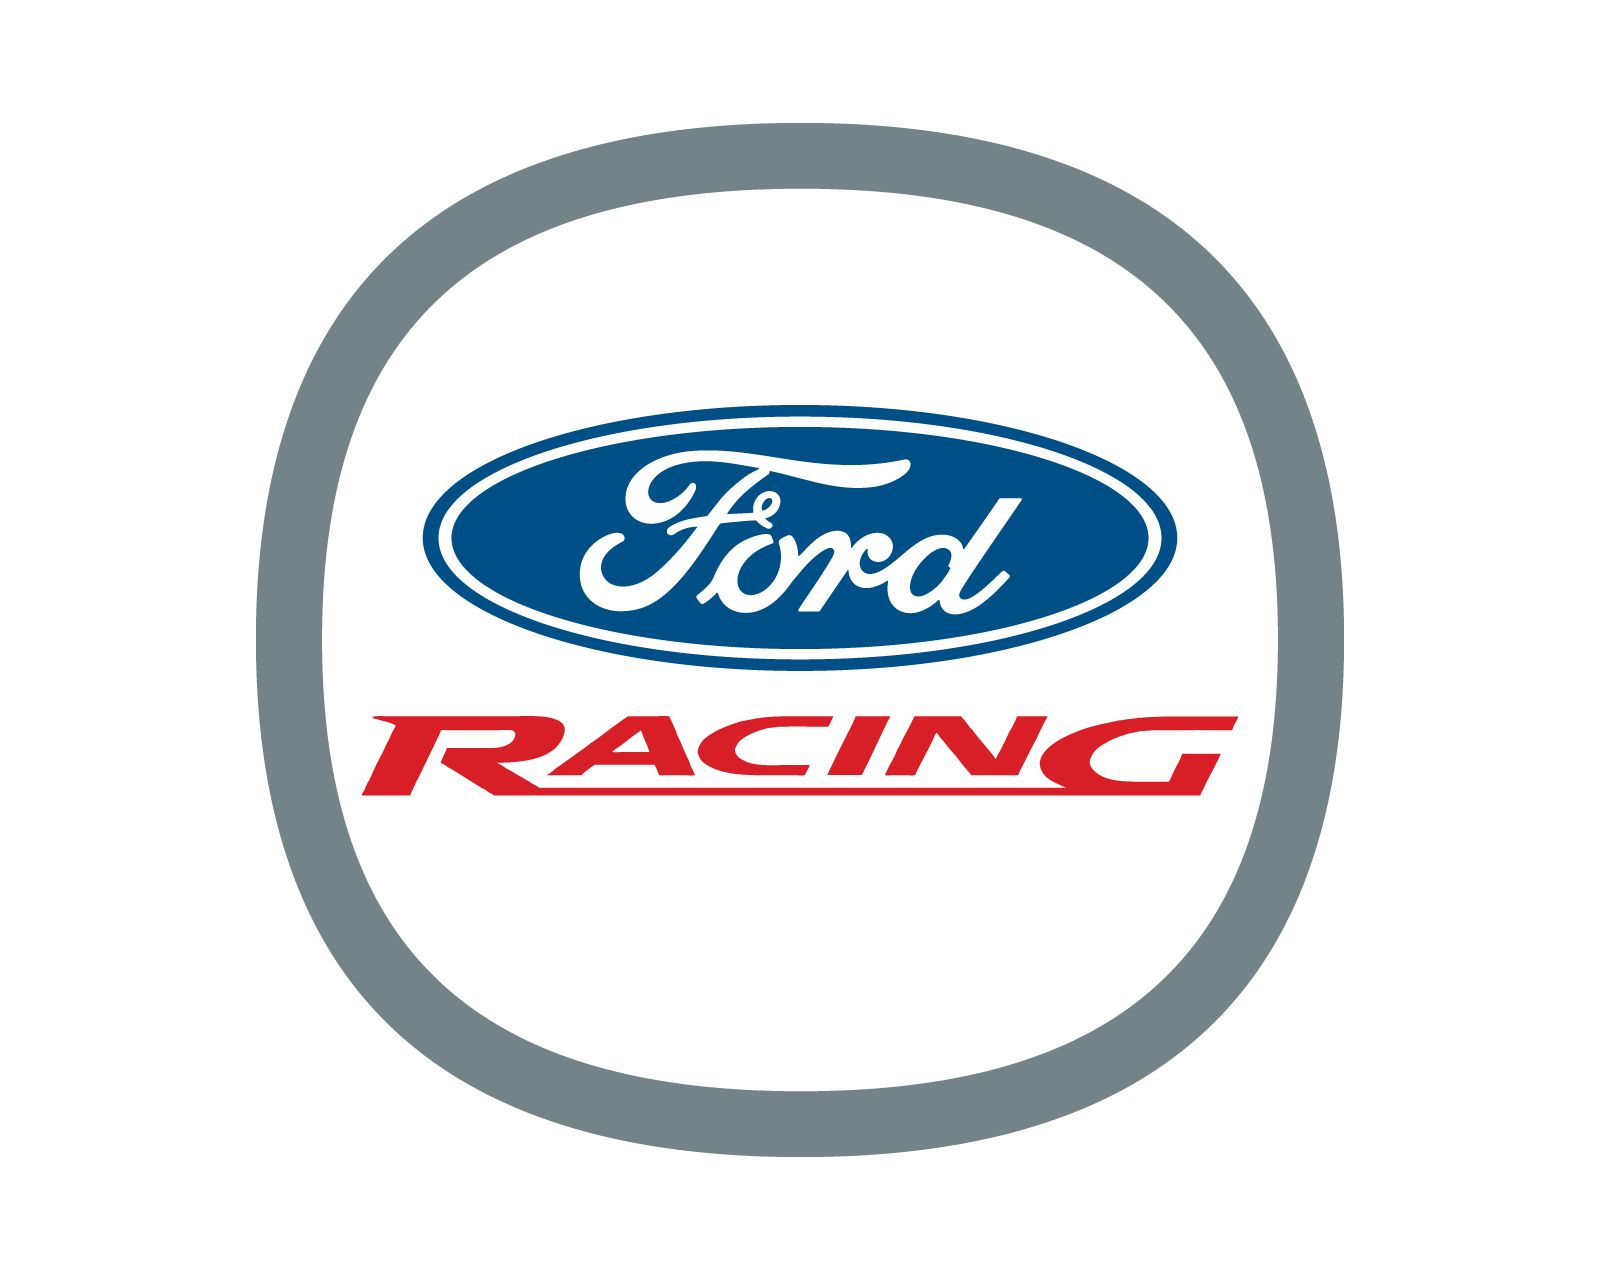 Cool Ford Racing Logos - image #446